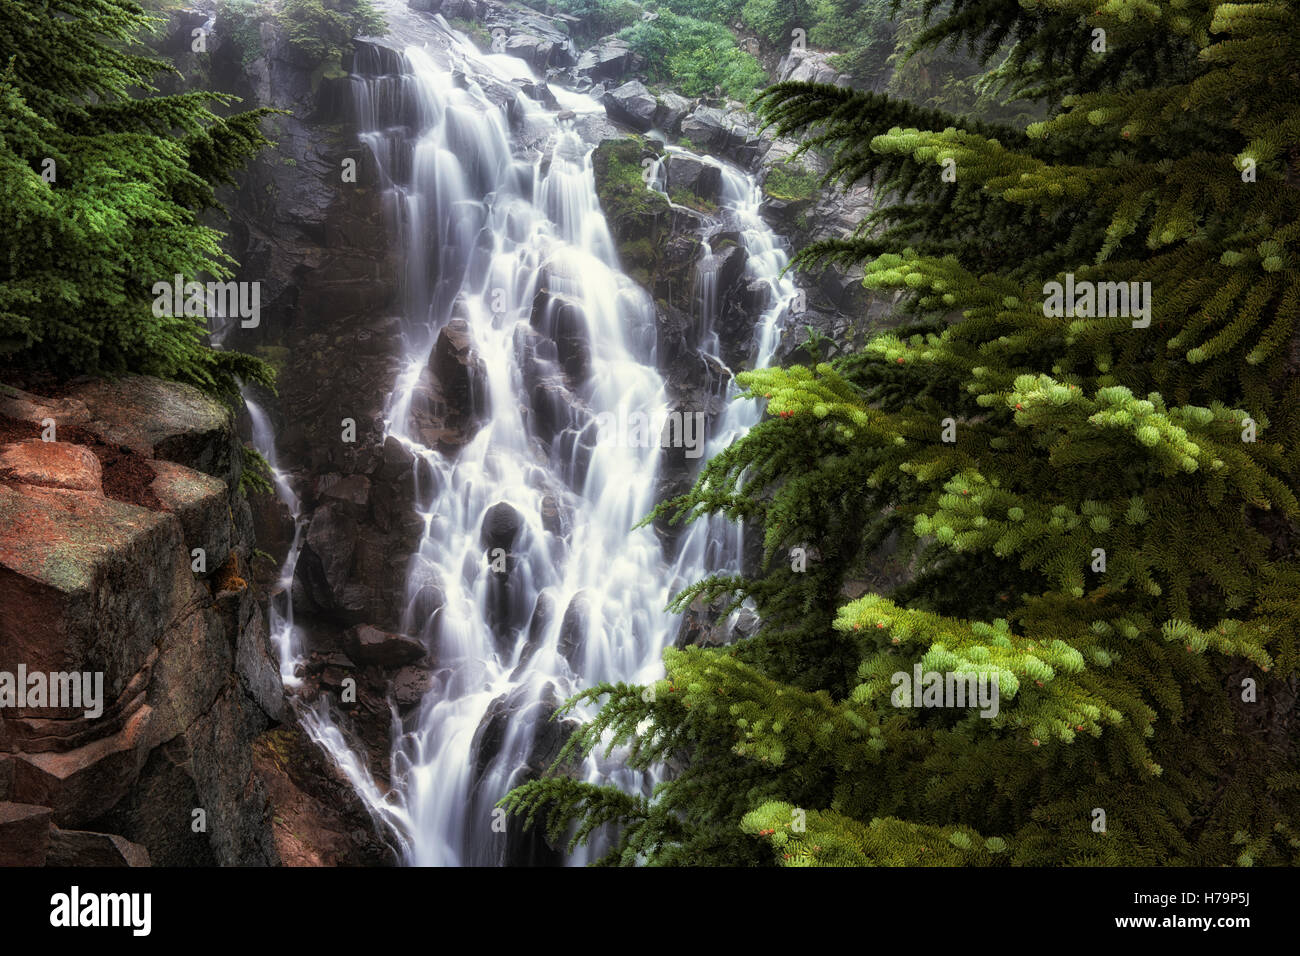 Edith Creek cascades 72 feet over Myrtle Falls and into a deep gorge at Washington’s Mt Rainier National Park. Stock Photo